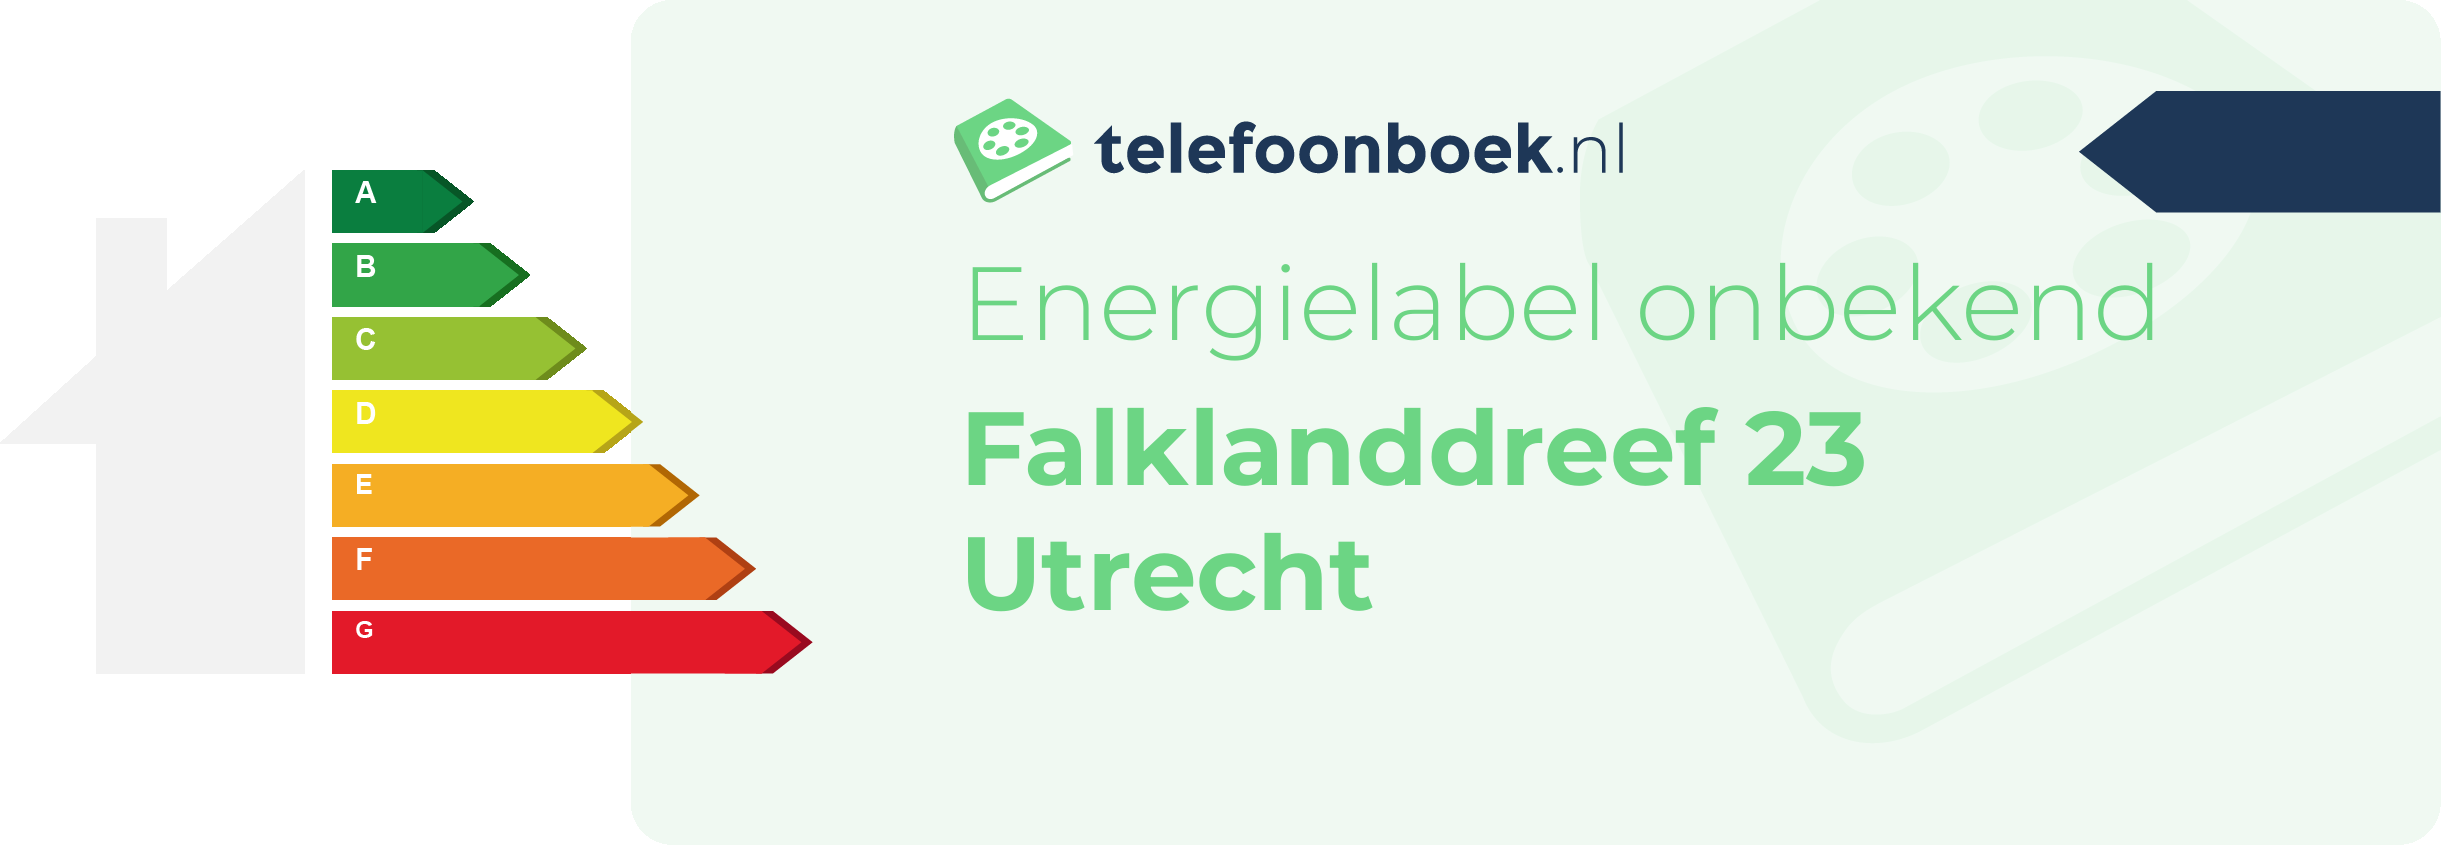 Energielabel Falklanddreef 23 Utrecht